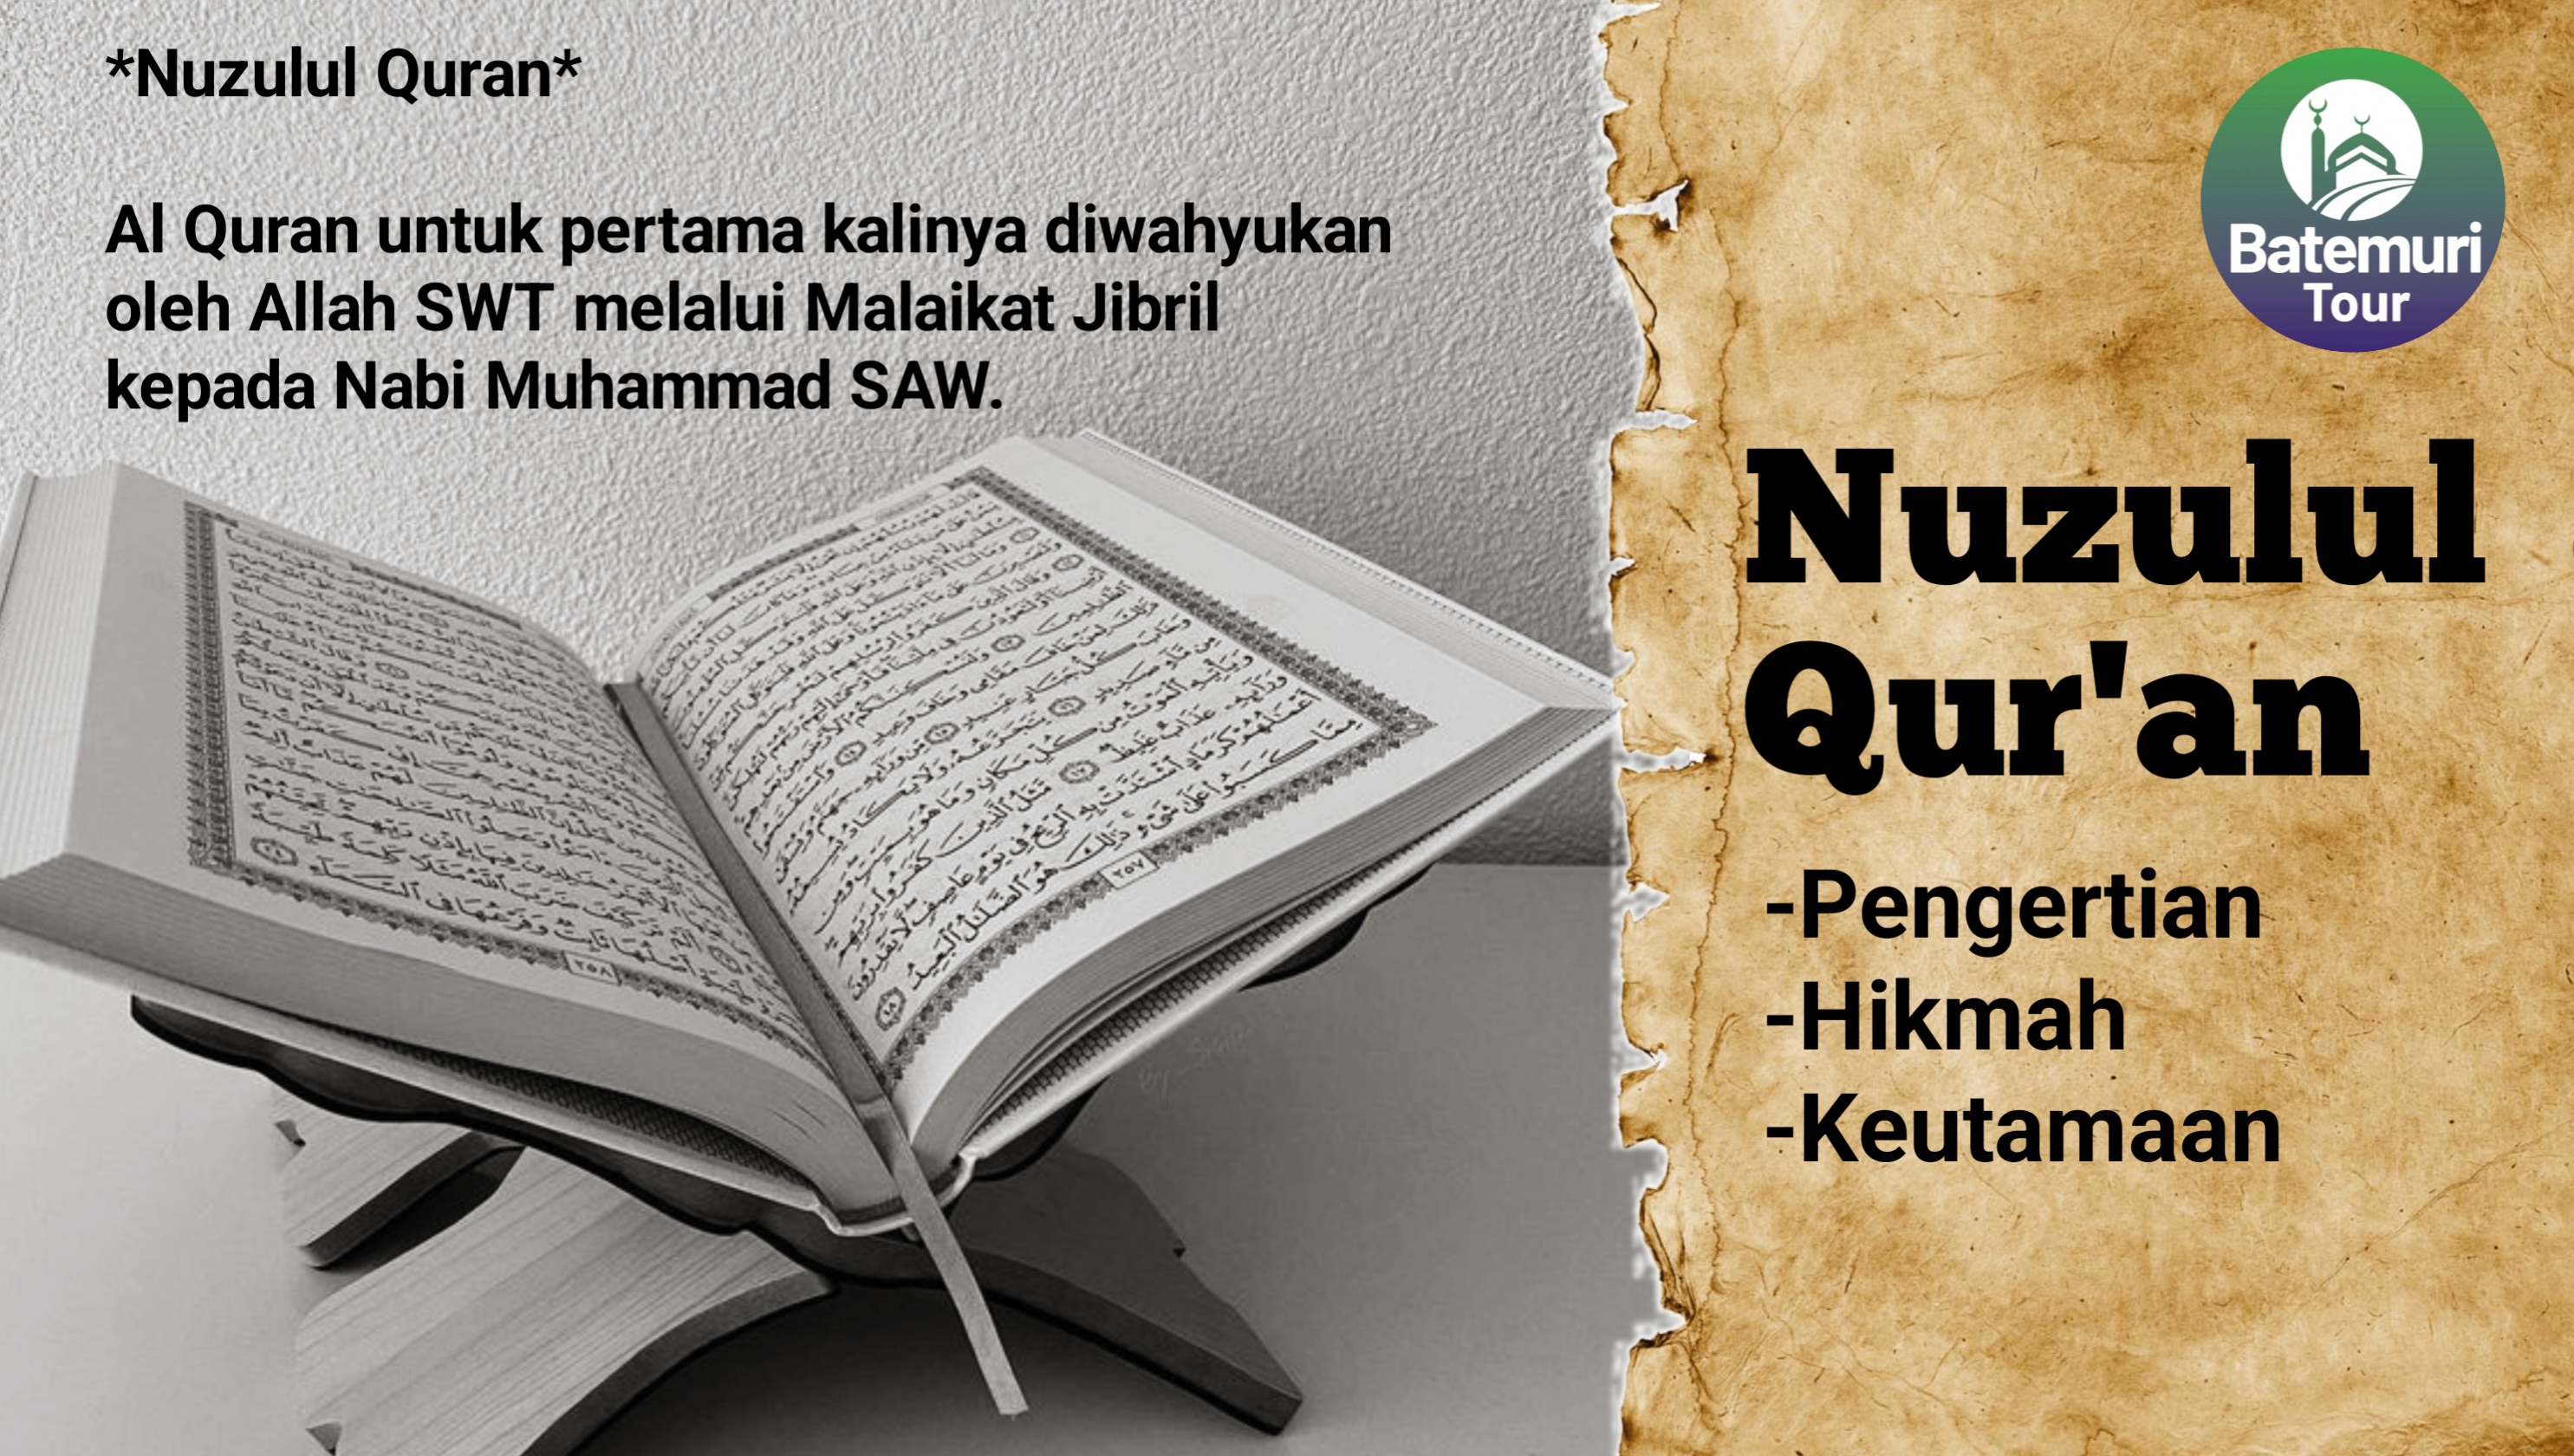 Pengertian, Hikmah, dan Keutamaan Nuzulul Qur,an